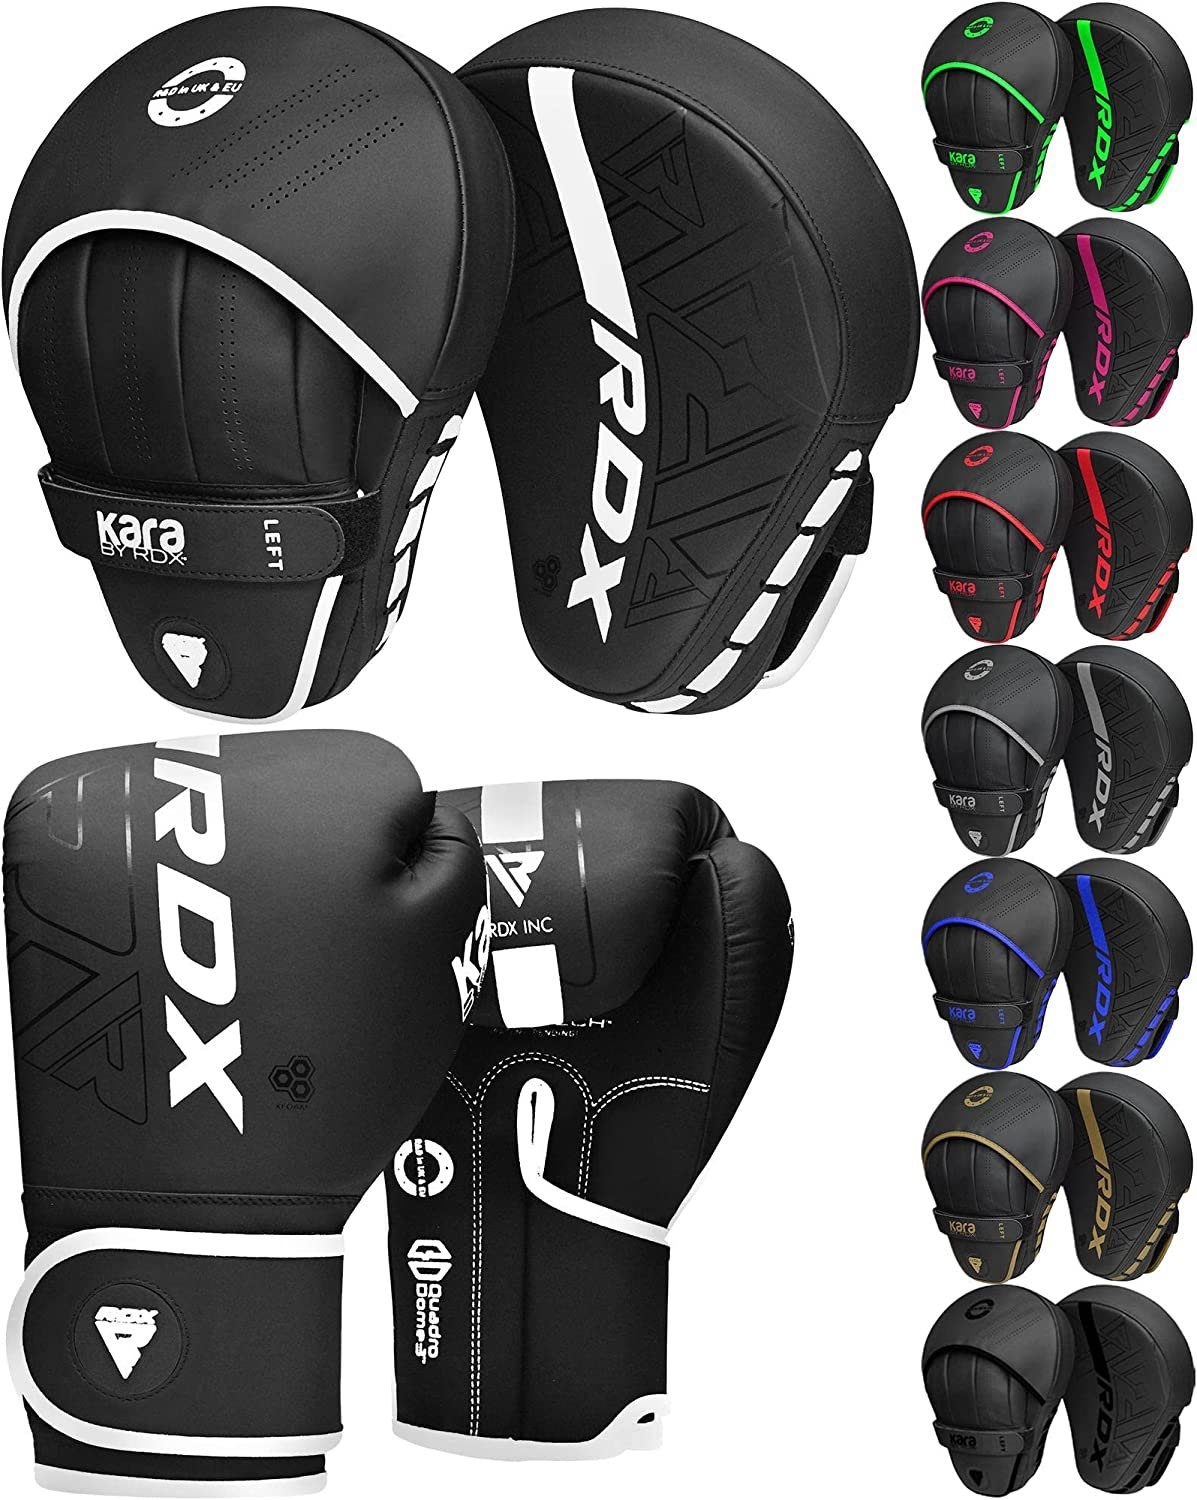 RDX Sports Junior Kinder Fokus Boxen Muay Handschuhe Pads Mitts RDX Thai WHITE Kinderboxhandschuhe